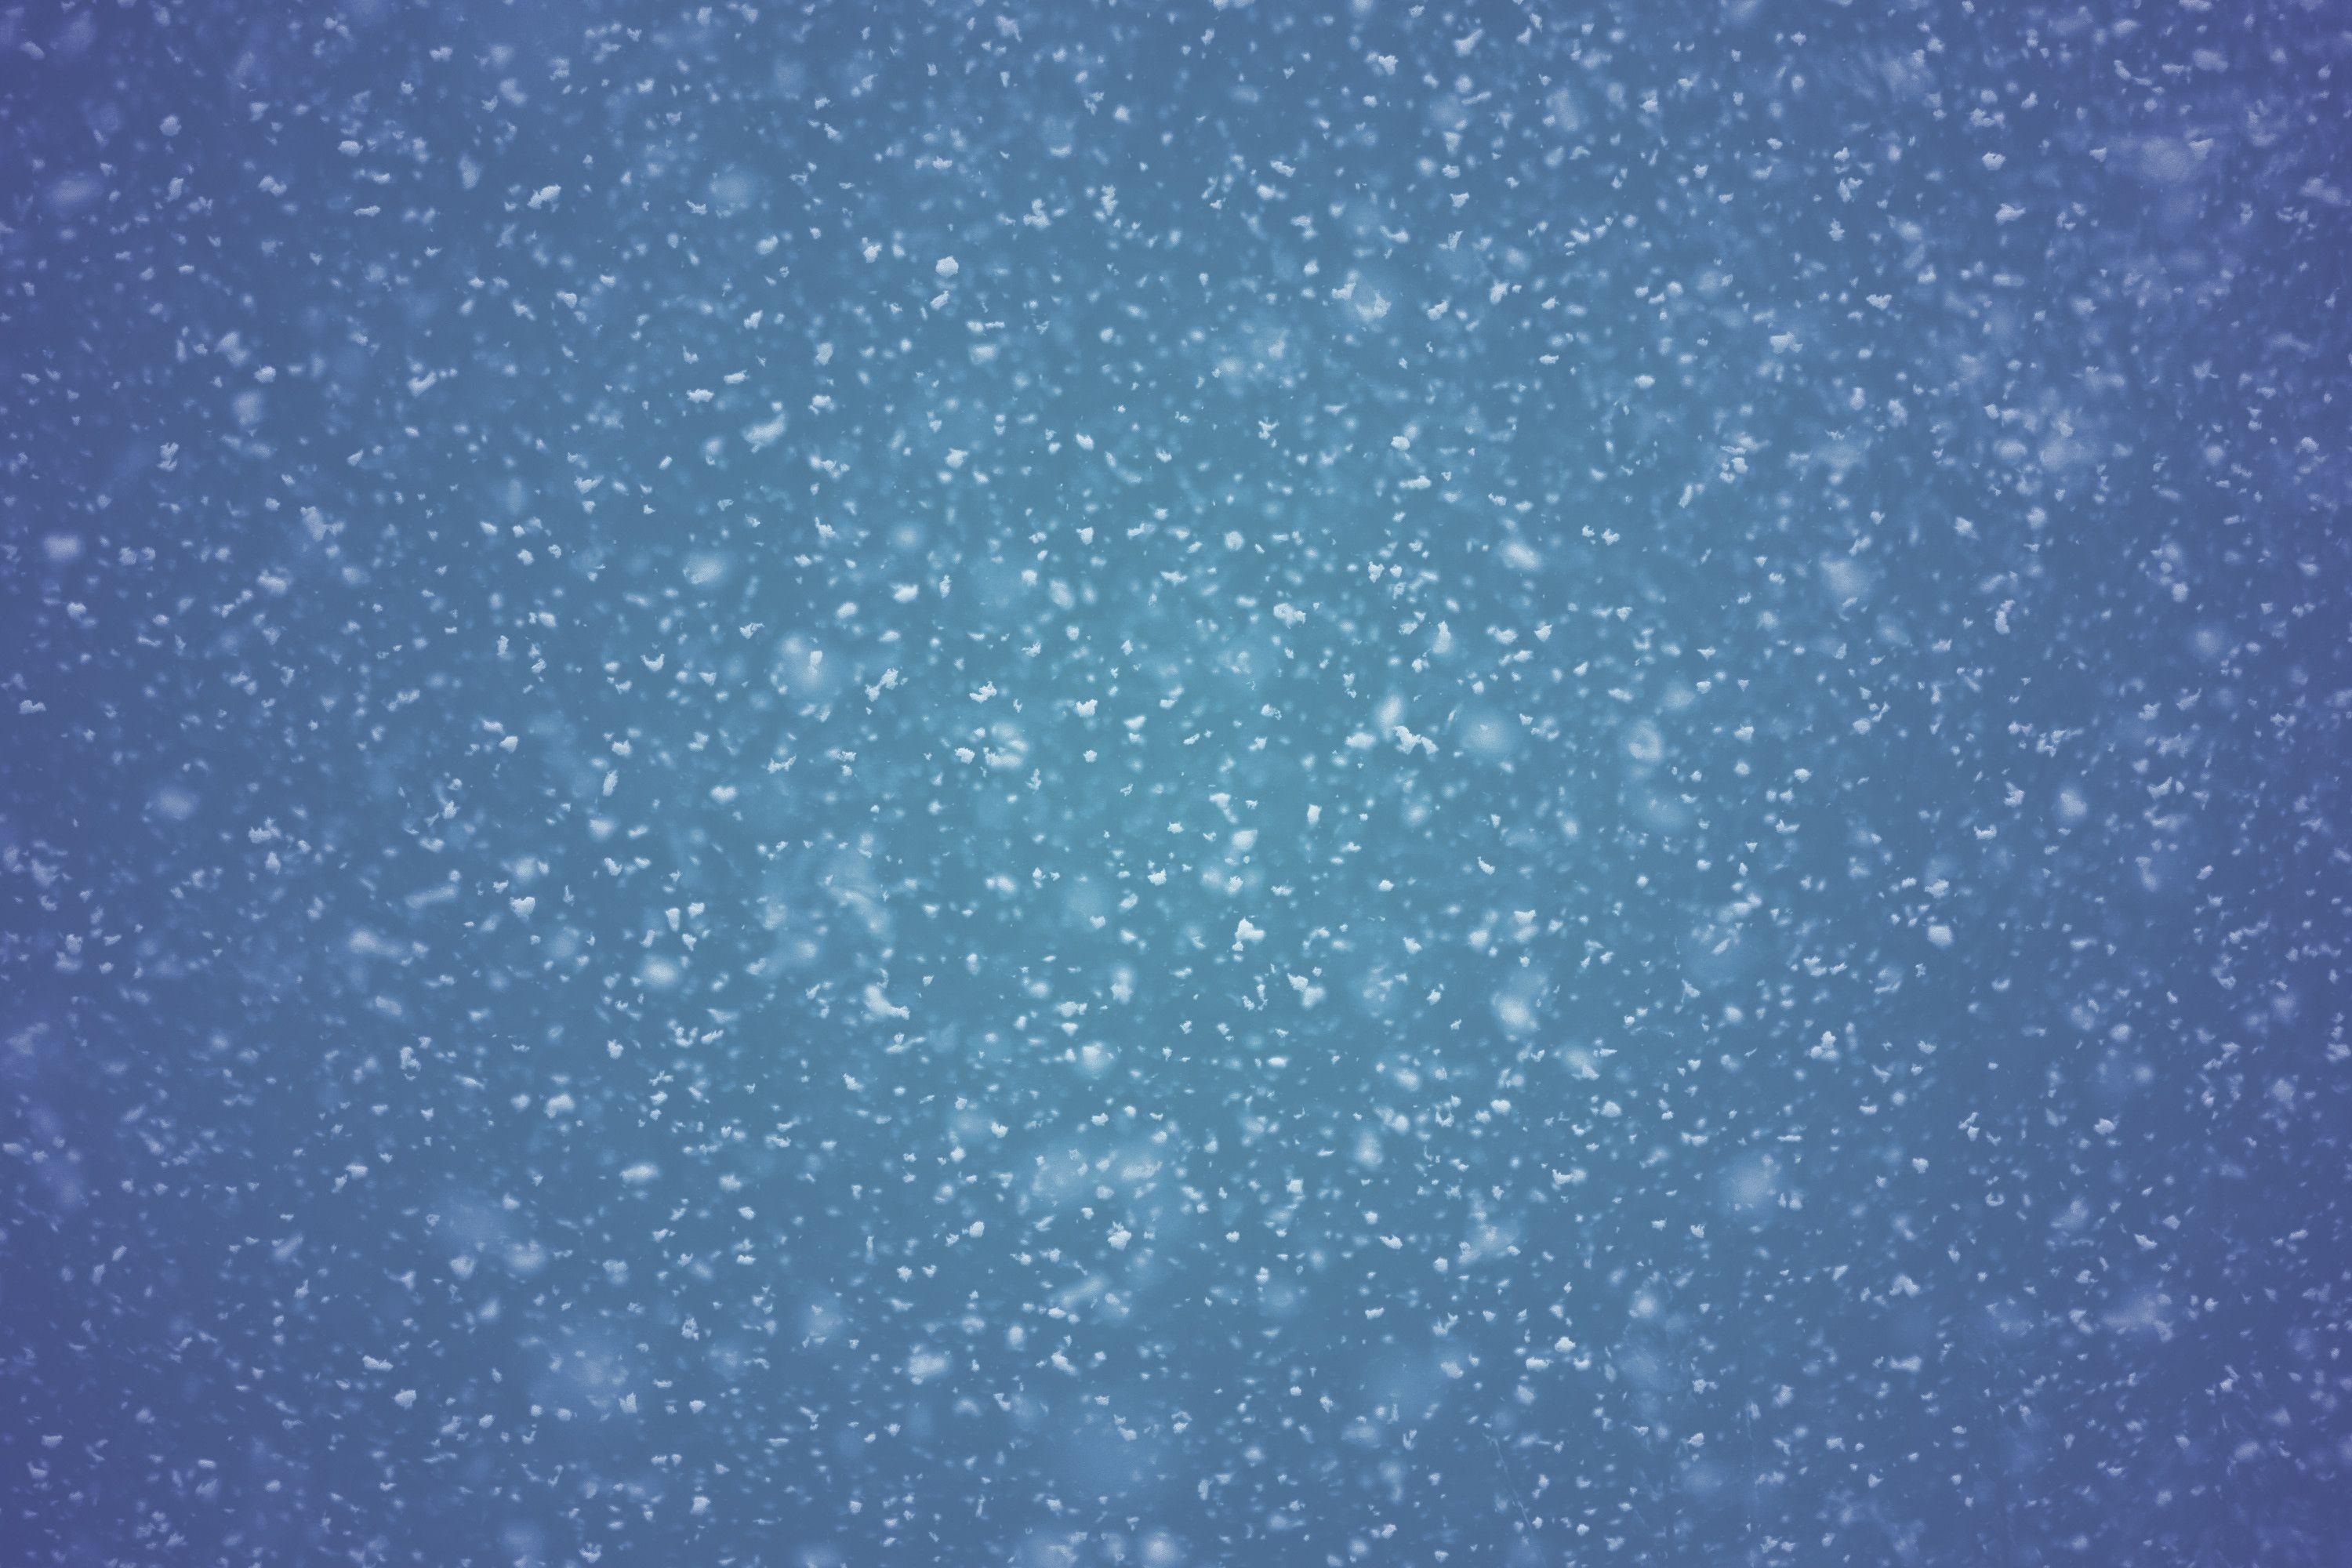 Falling Snow Flakes Texture